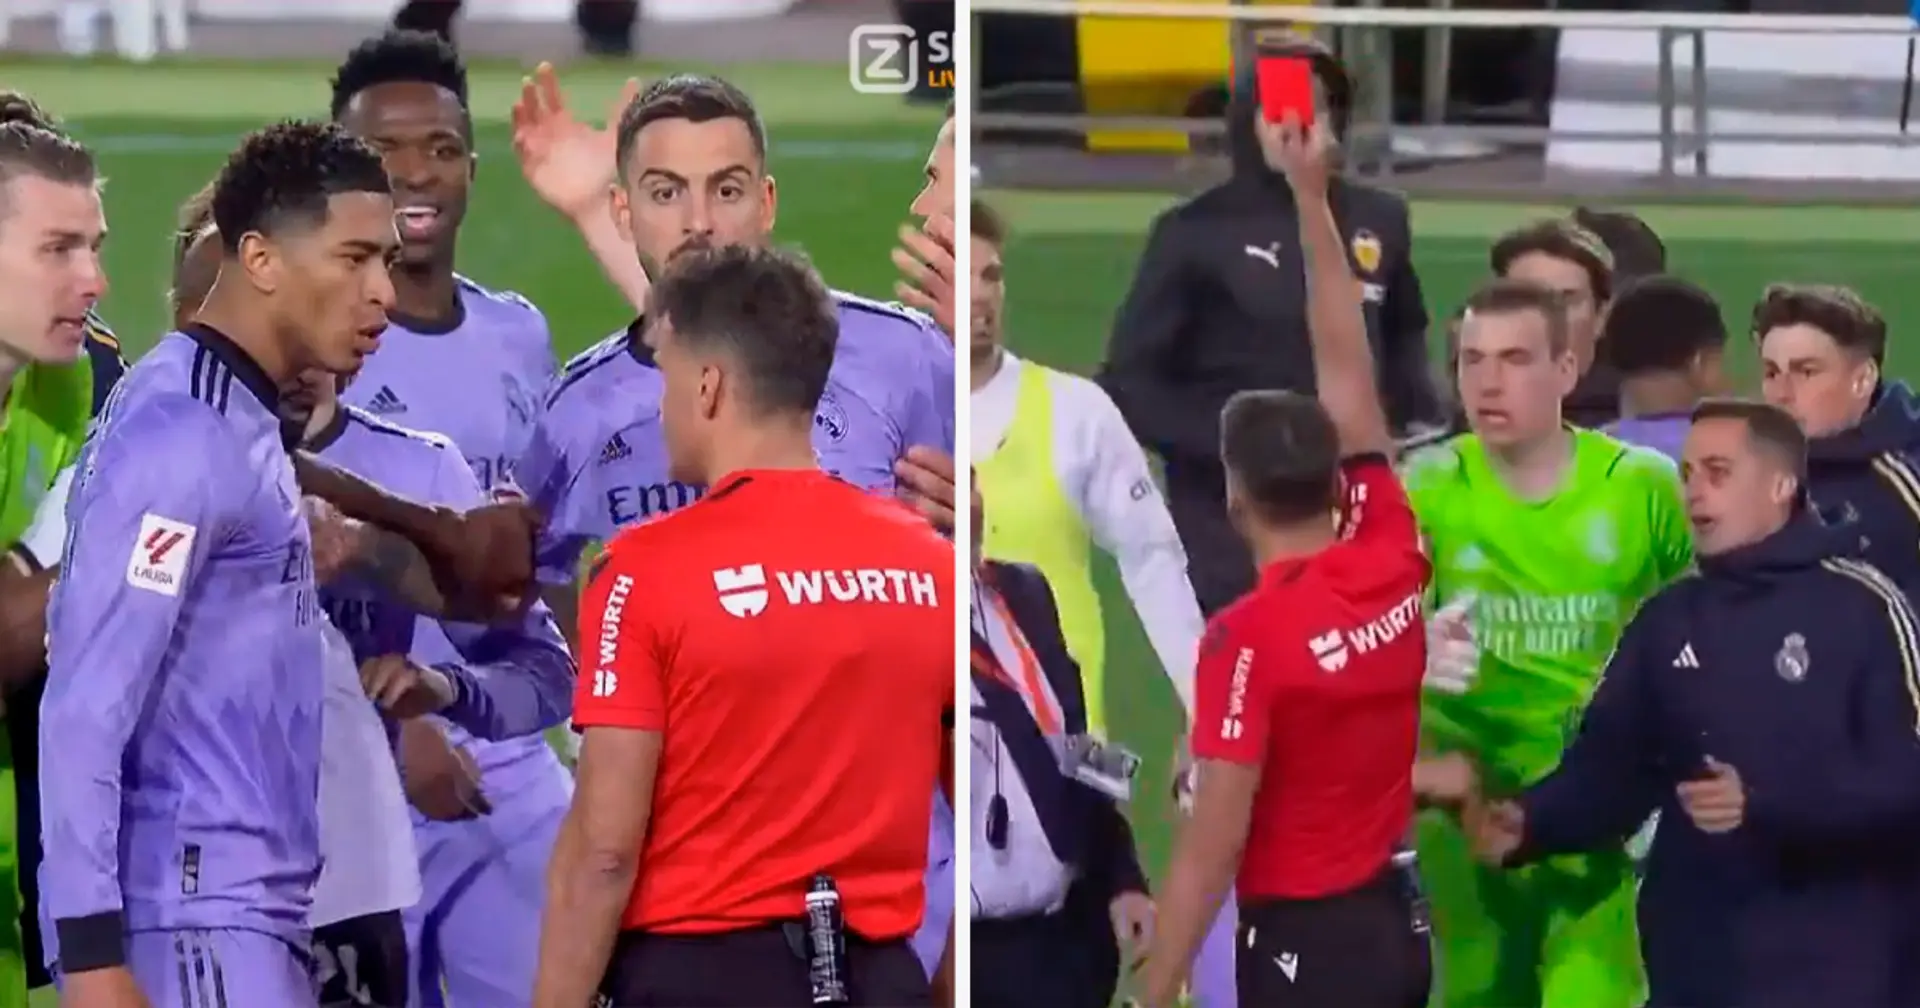 Cómo reaccionó Jude Bellingham al recibir la tarjeta roja después de que le anularan el gol de victoria vs Valencia: visto